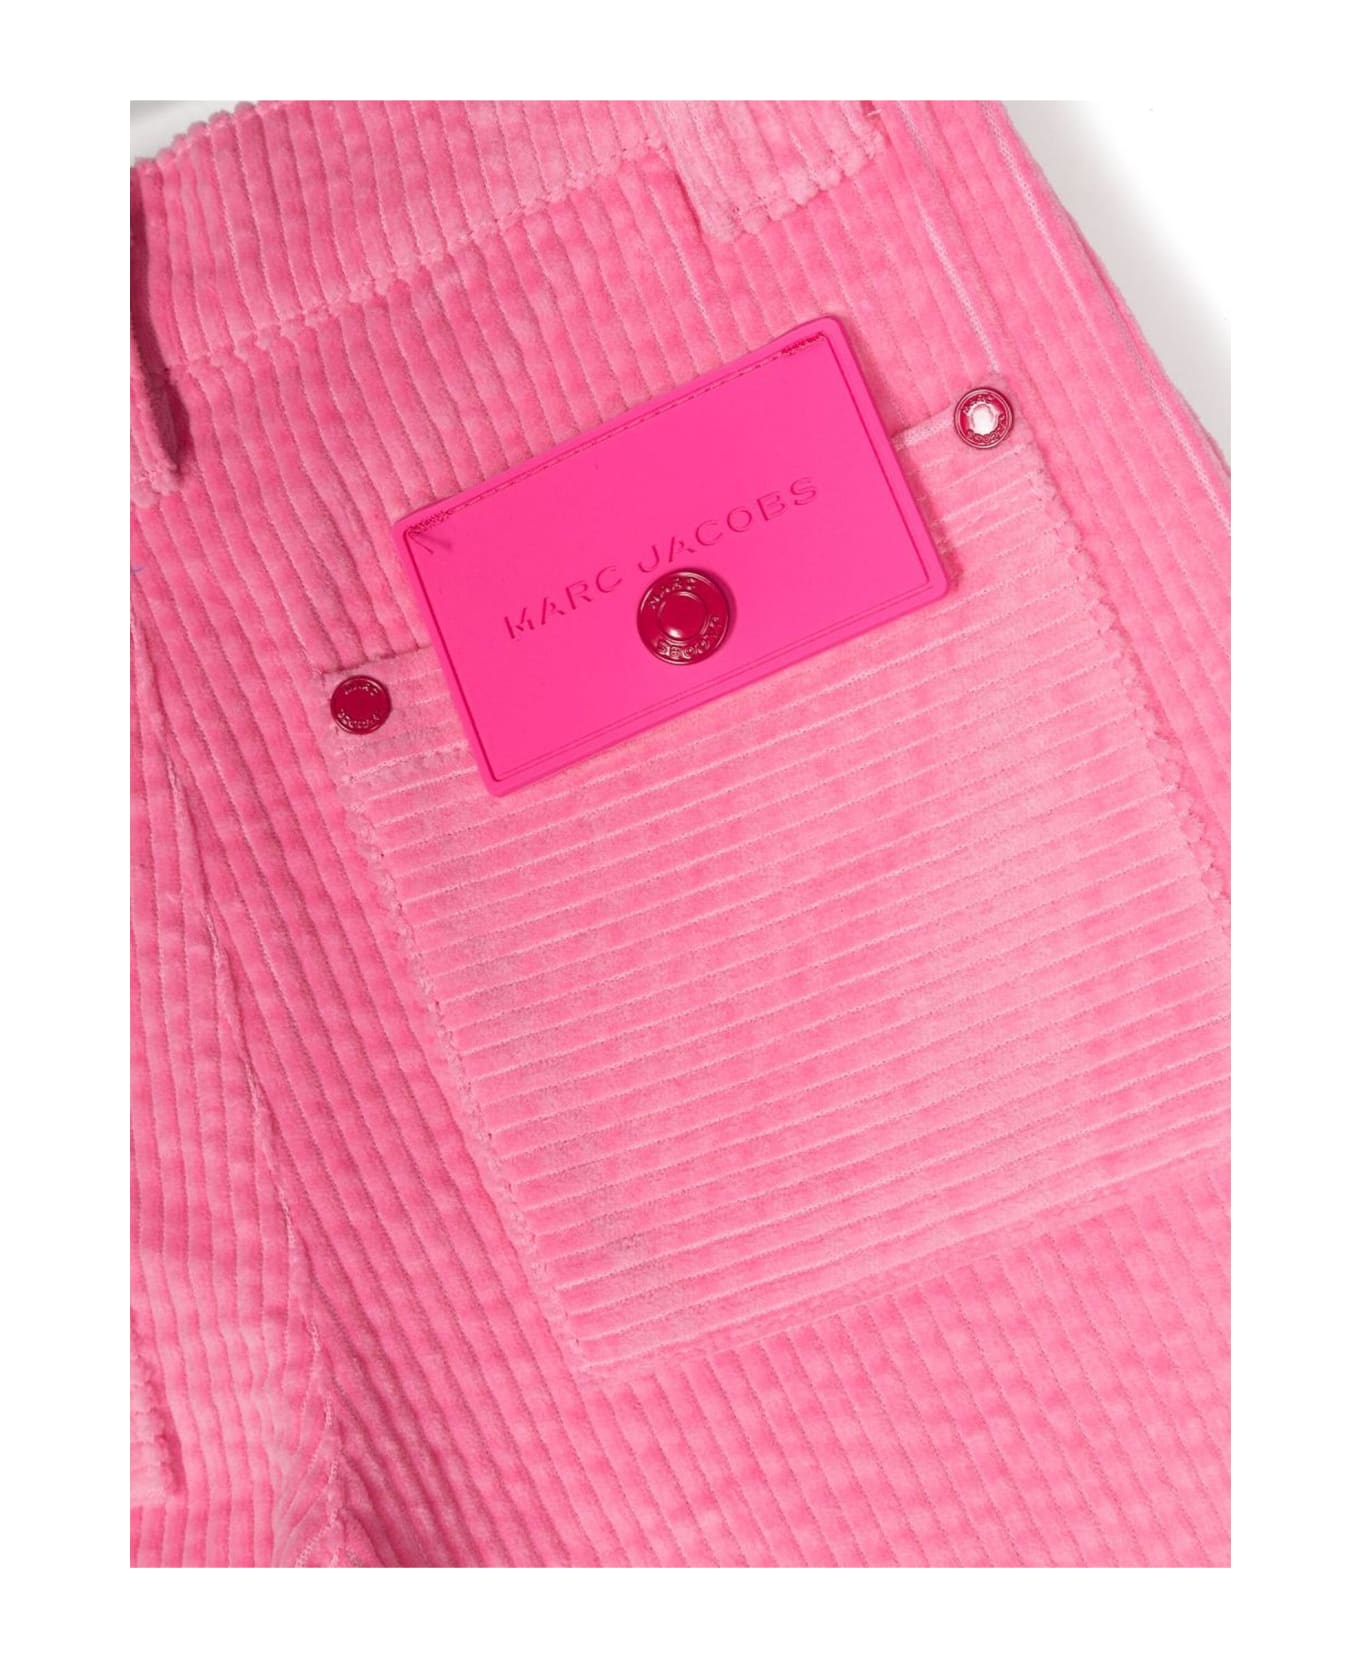 Little Marc Jacobs Pink Cotton Corduroy Trousers - G Albicocca